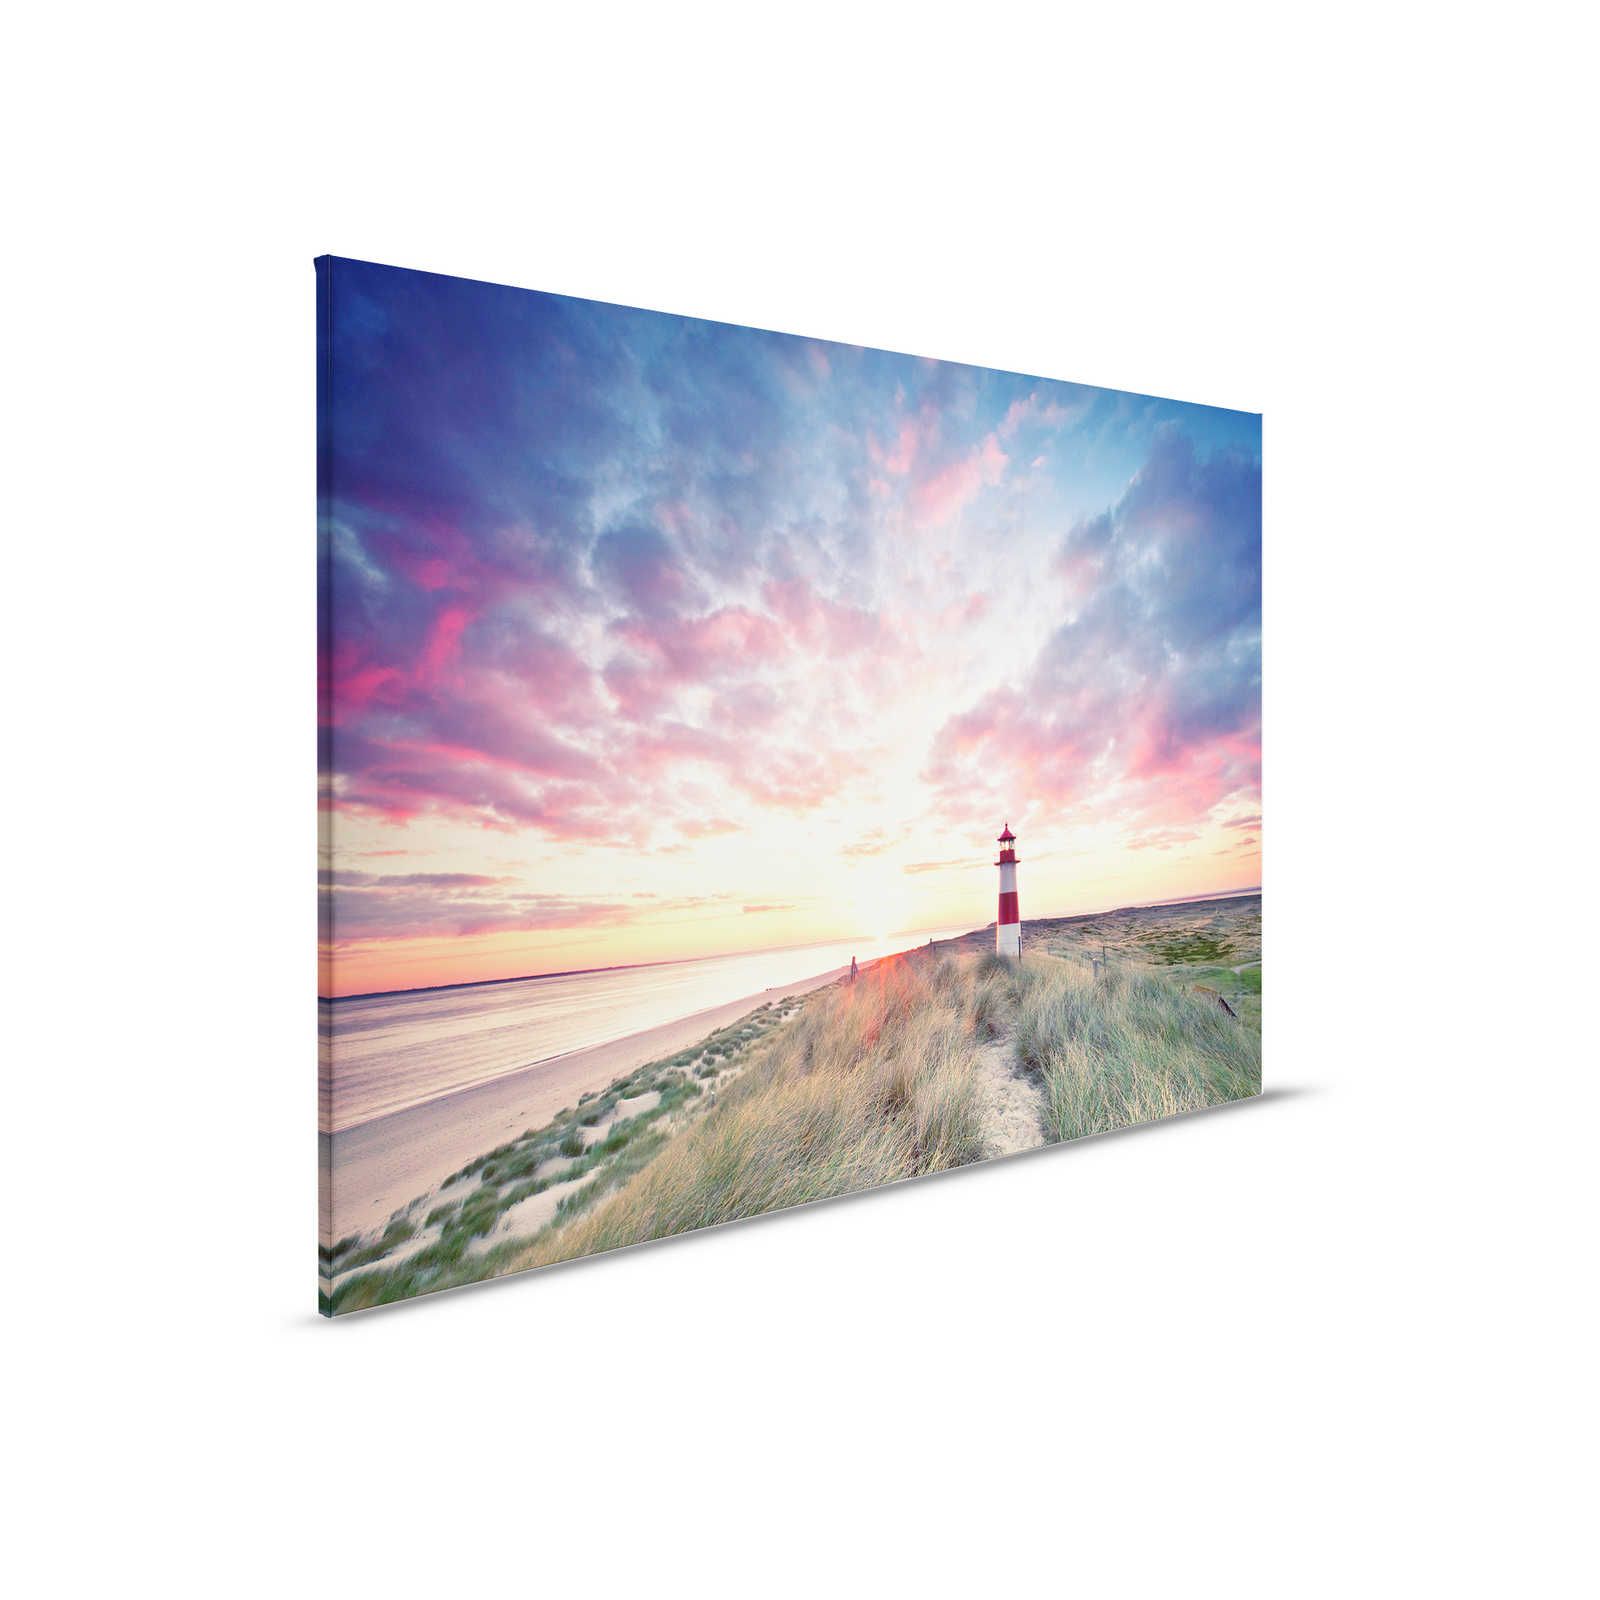         Coastal Landscape Canvas Painting with Lighthouse - 0.90 m x 0.60 m
    